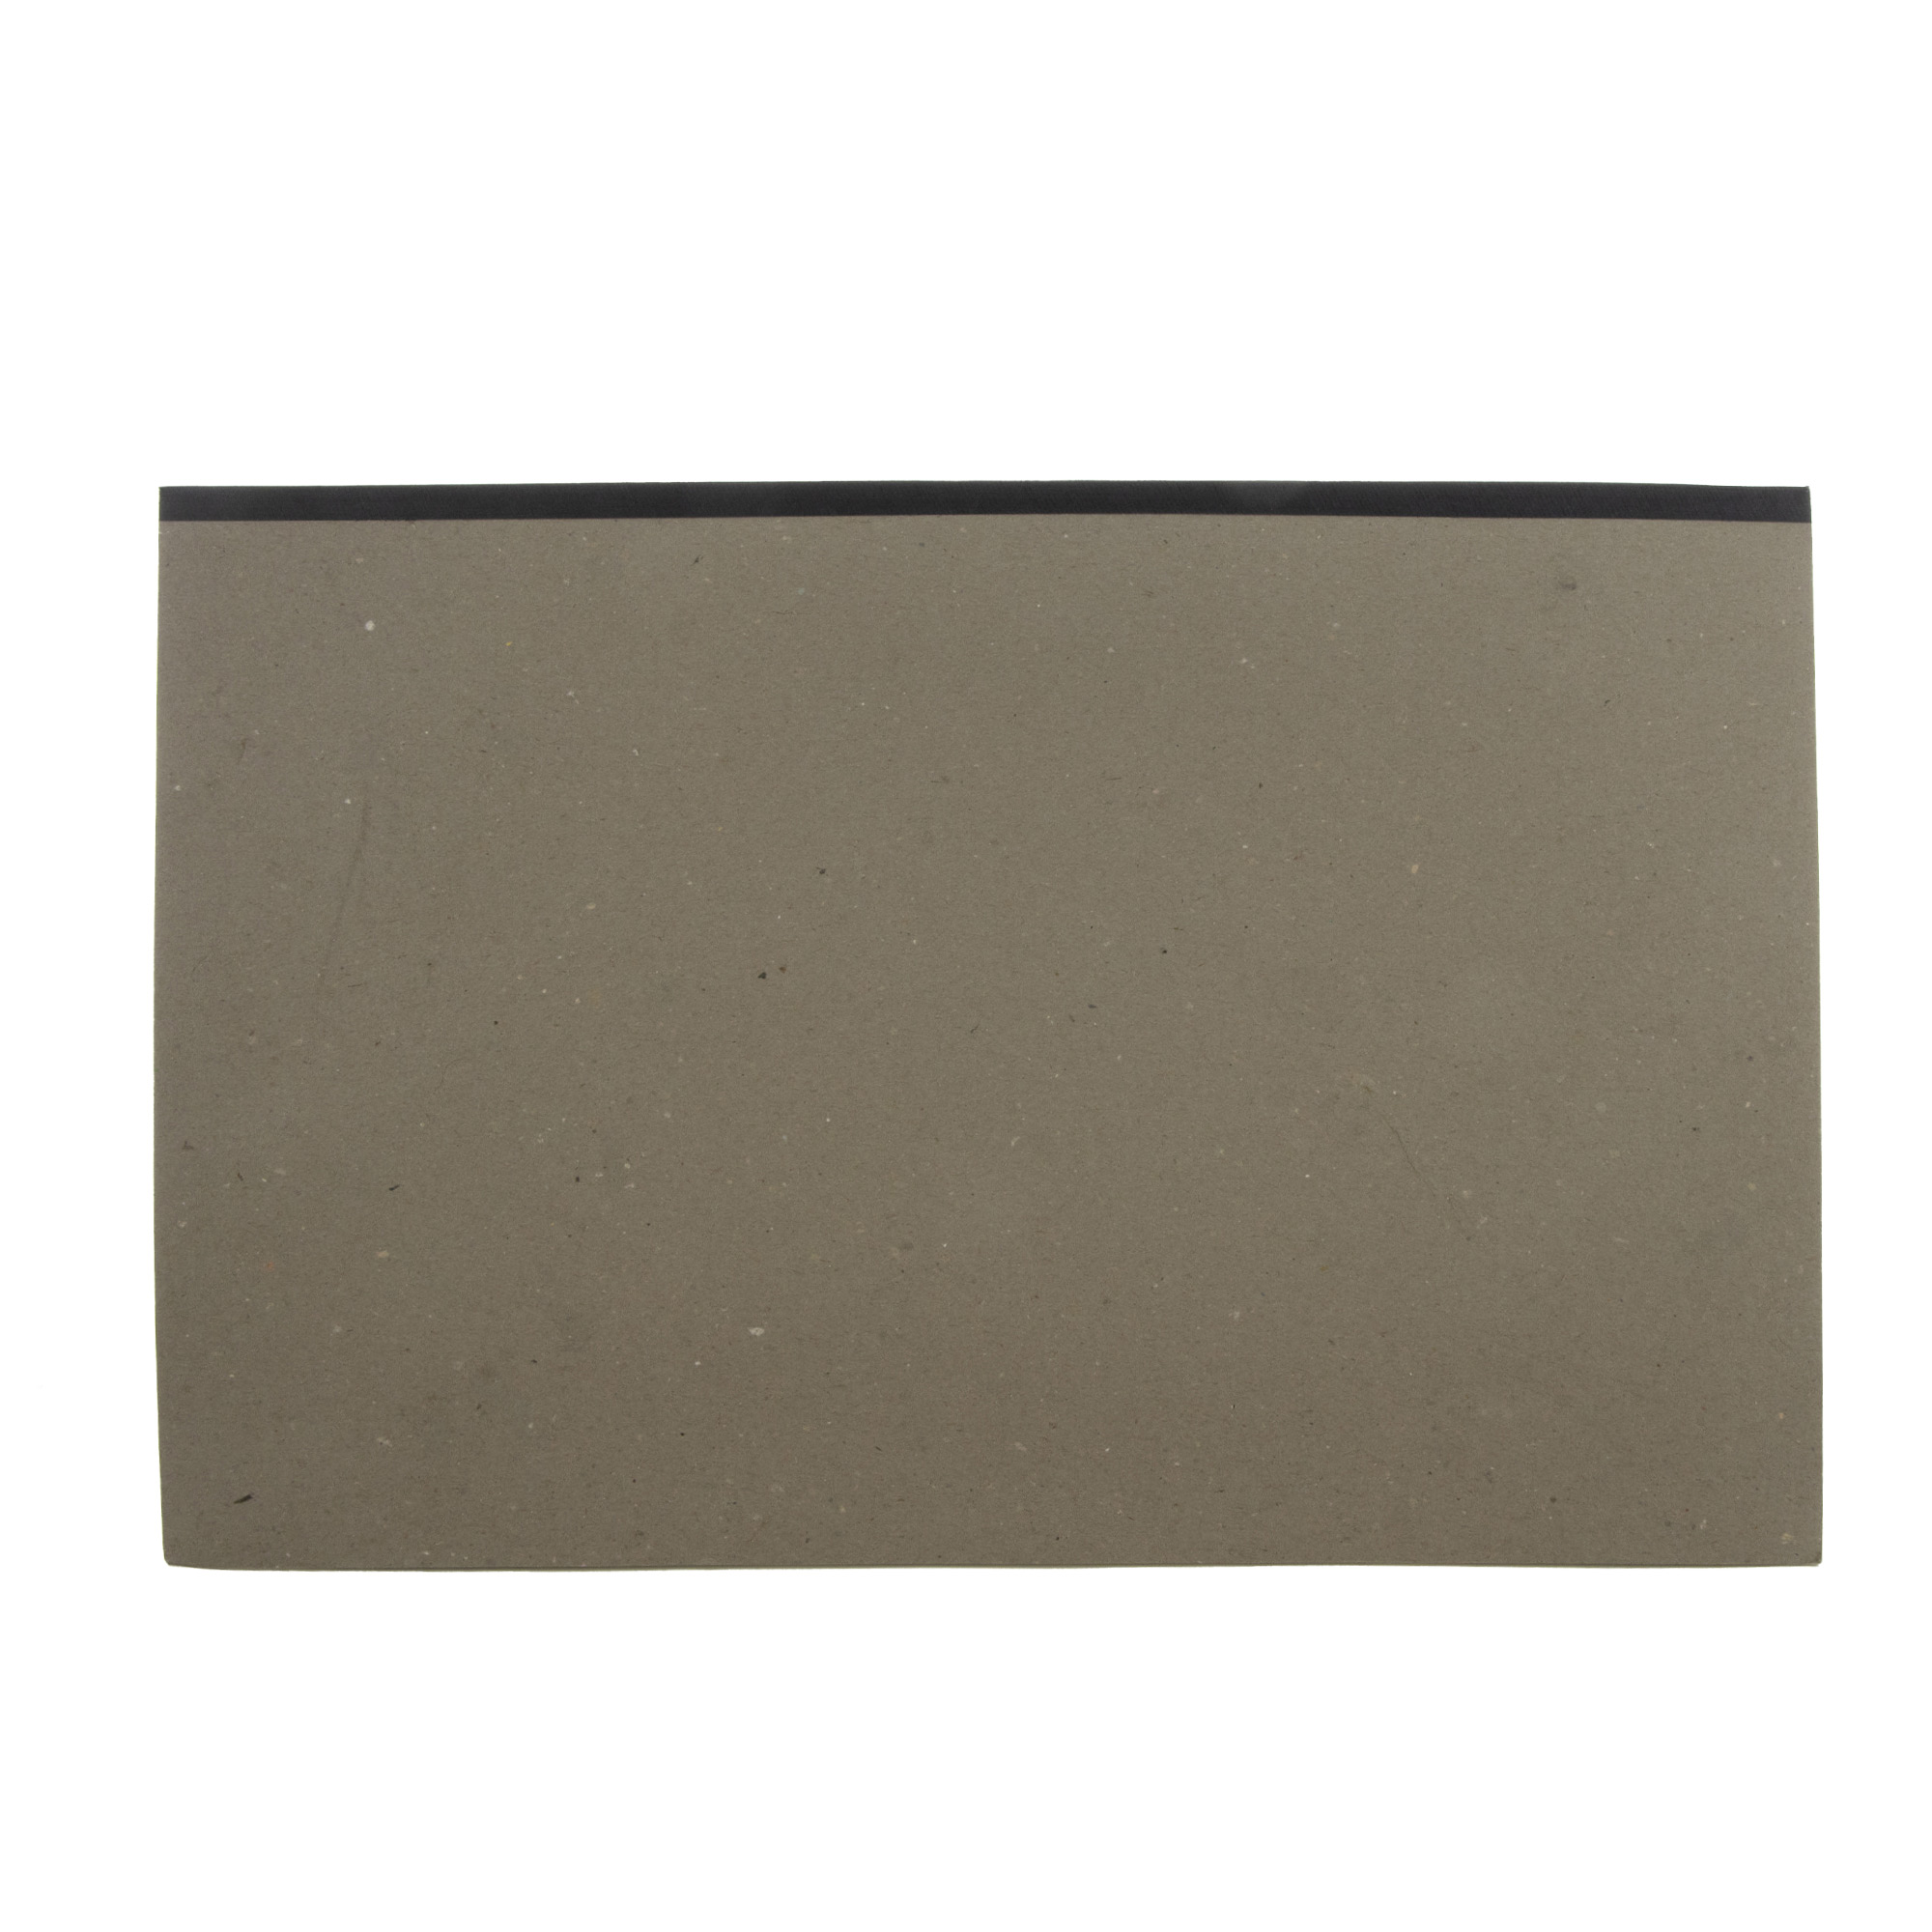 Bazic 40 Ct. 9 inch x 12 inch Premium Sketch Pad Pack of - 48